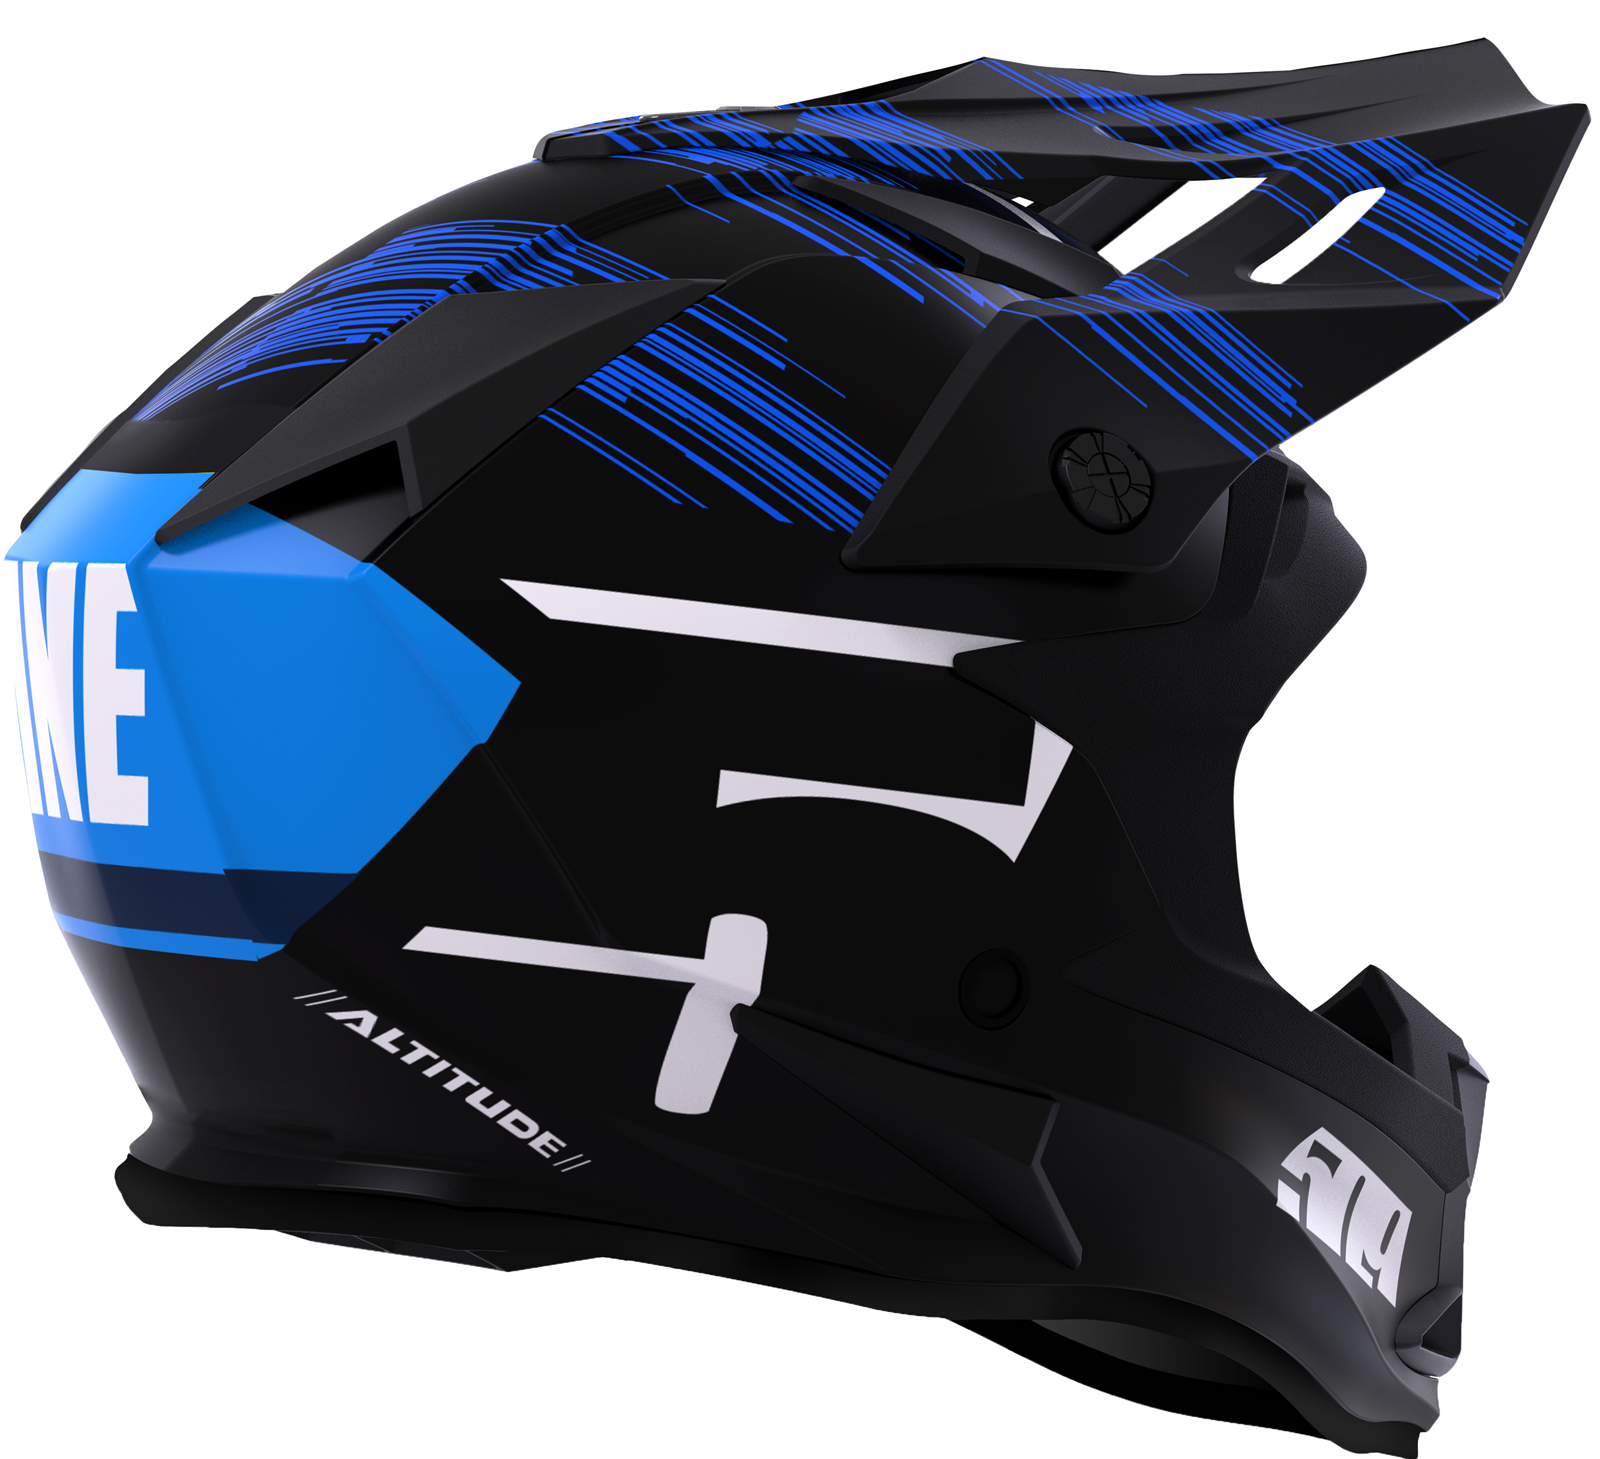 509 Altitude 2.0 High Flow Helmet - Cyan Blue